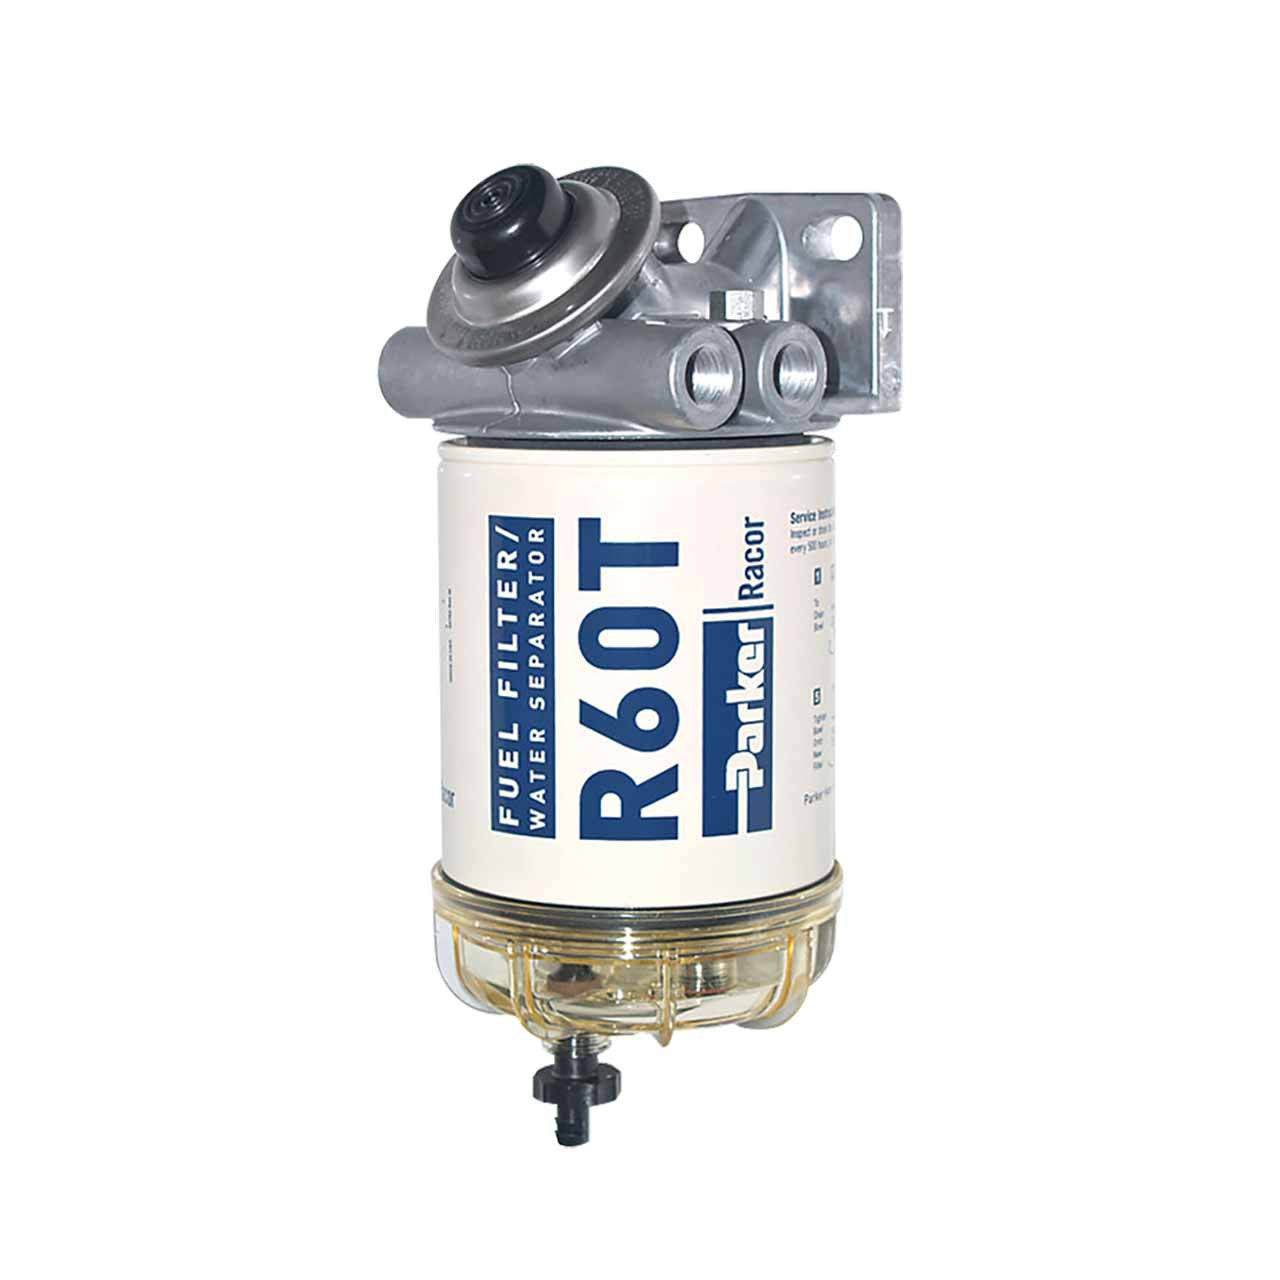 460R Racor Diesel Spin-on Fuel Filter/Water Separator